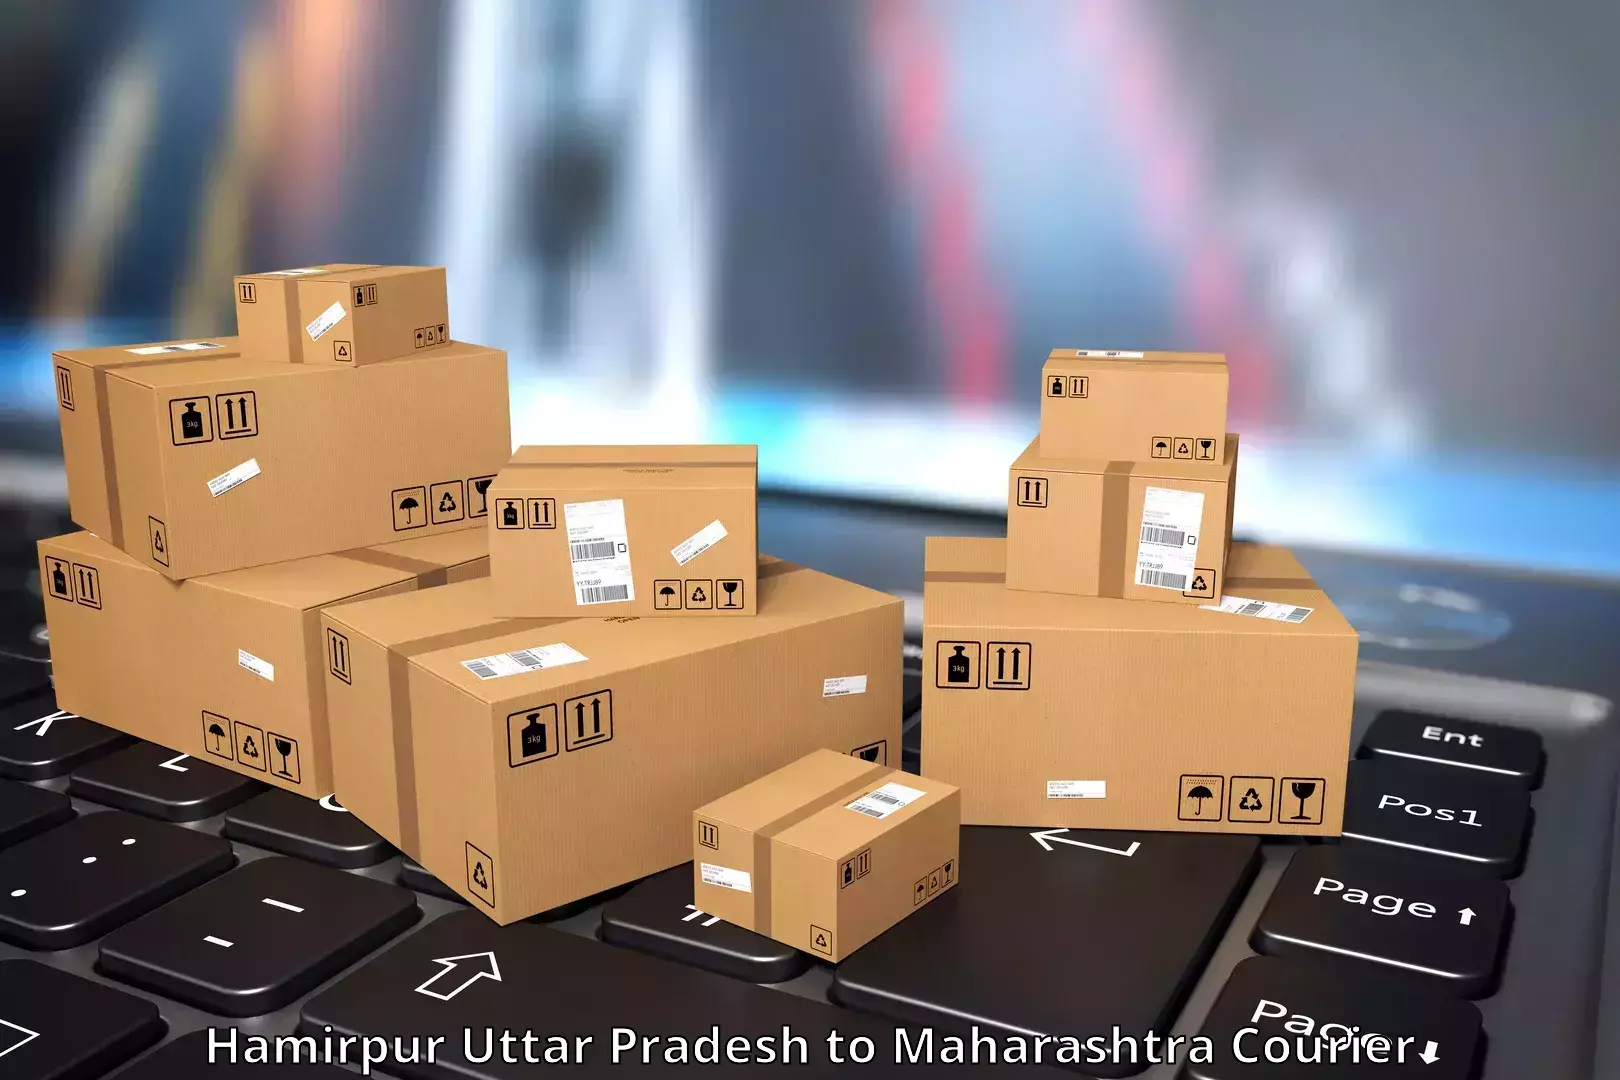 24/7 courier service Hamirpur Uttar Pradesh to Chandrapur